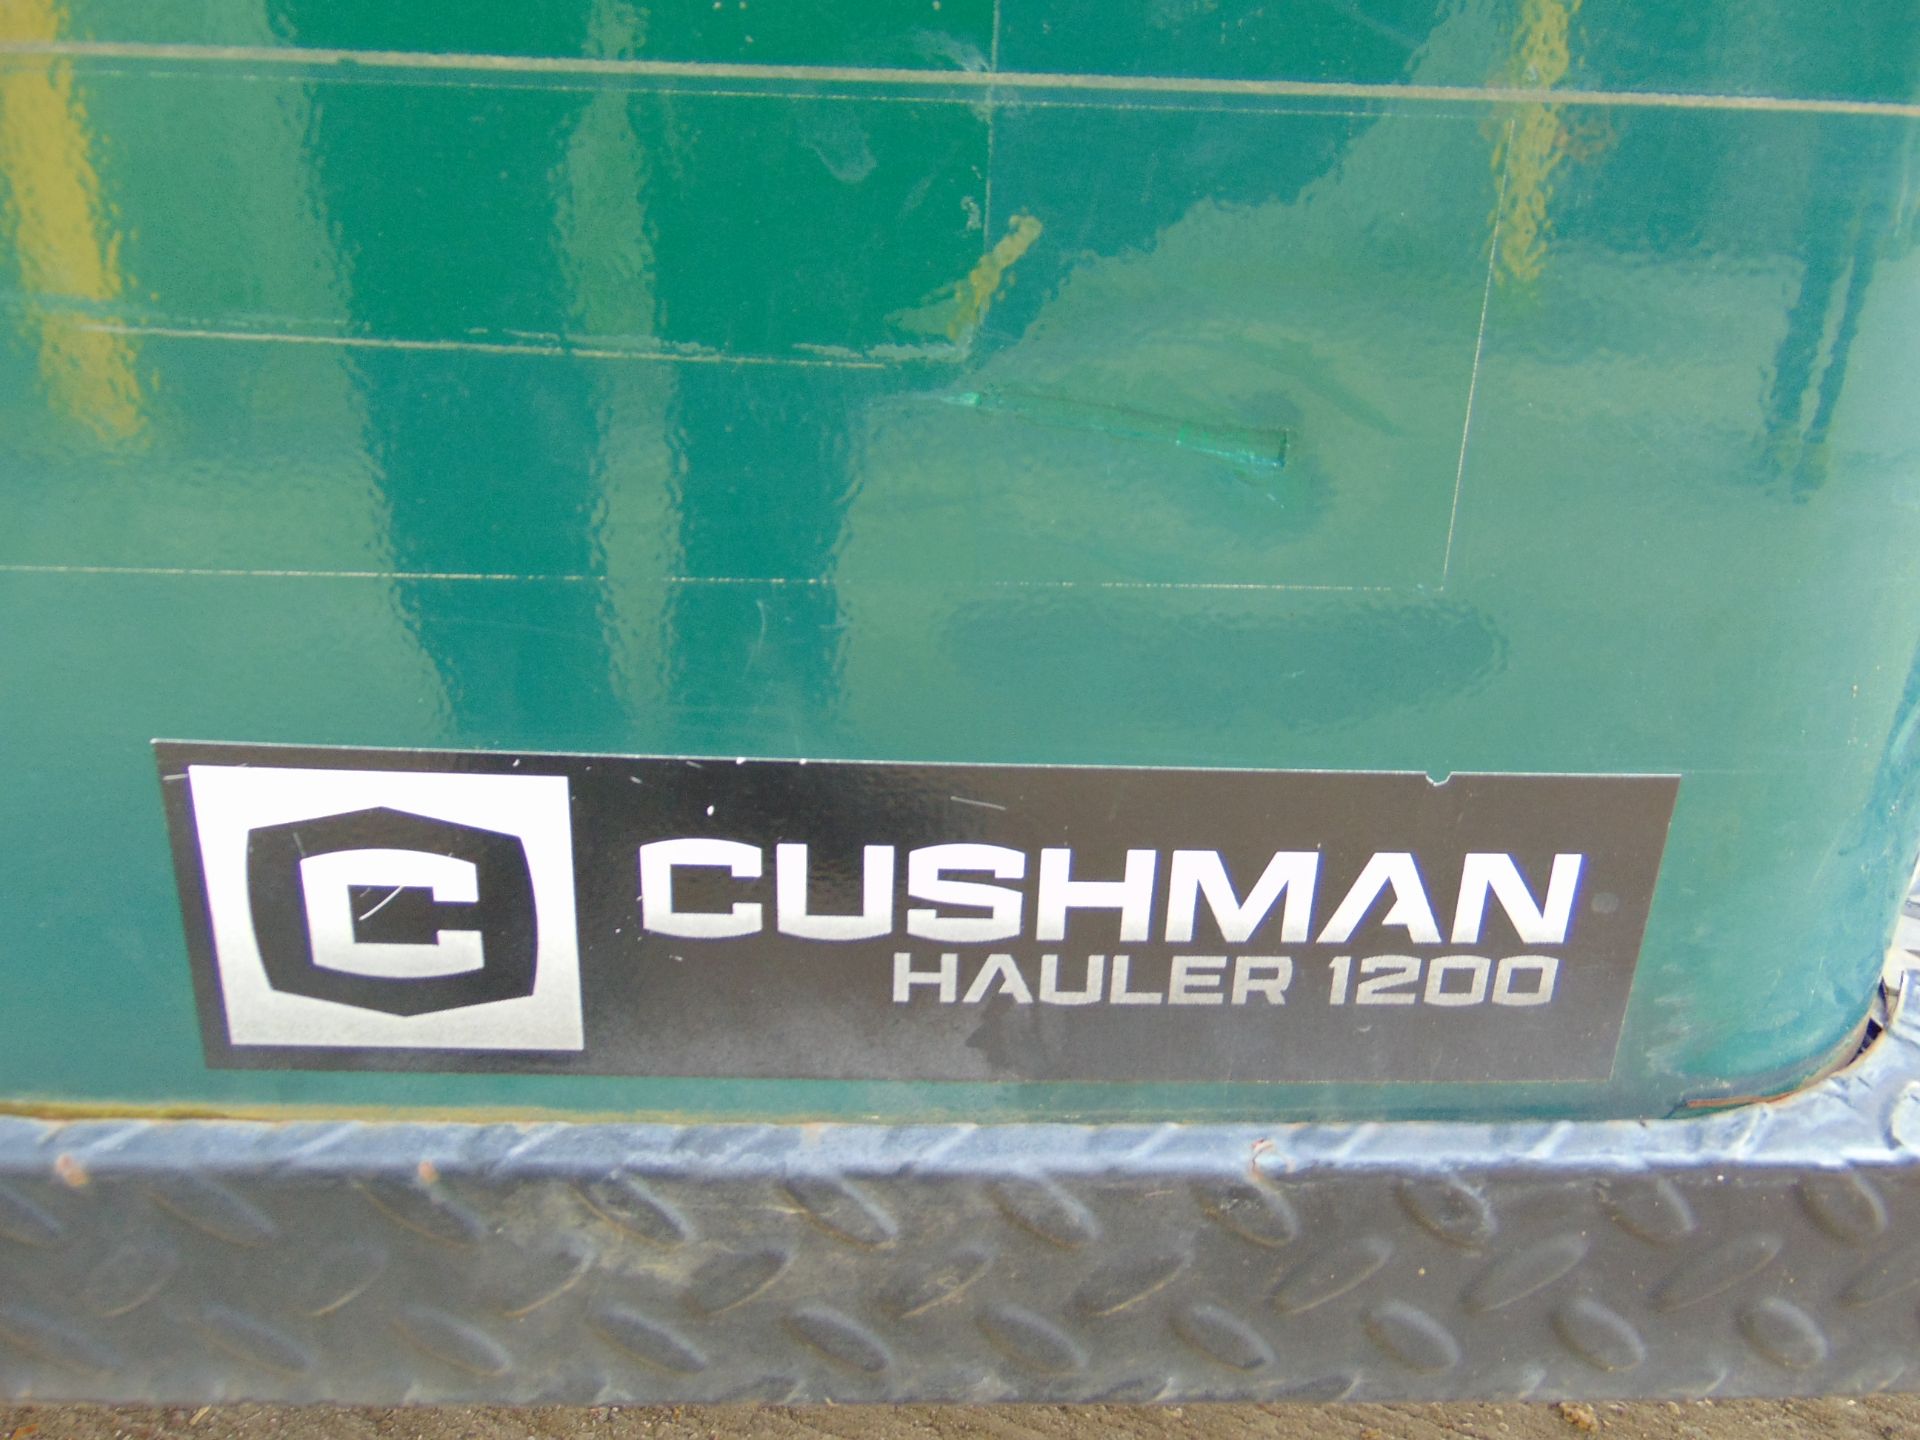 Cushman Hauler 1200 Petrol Utility Vehicle - Image 25 of 26